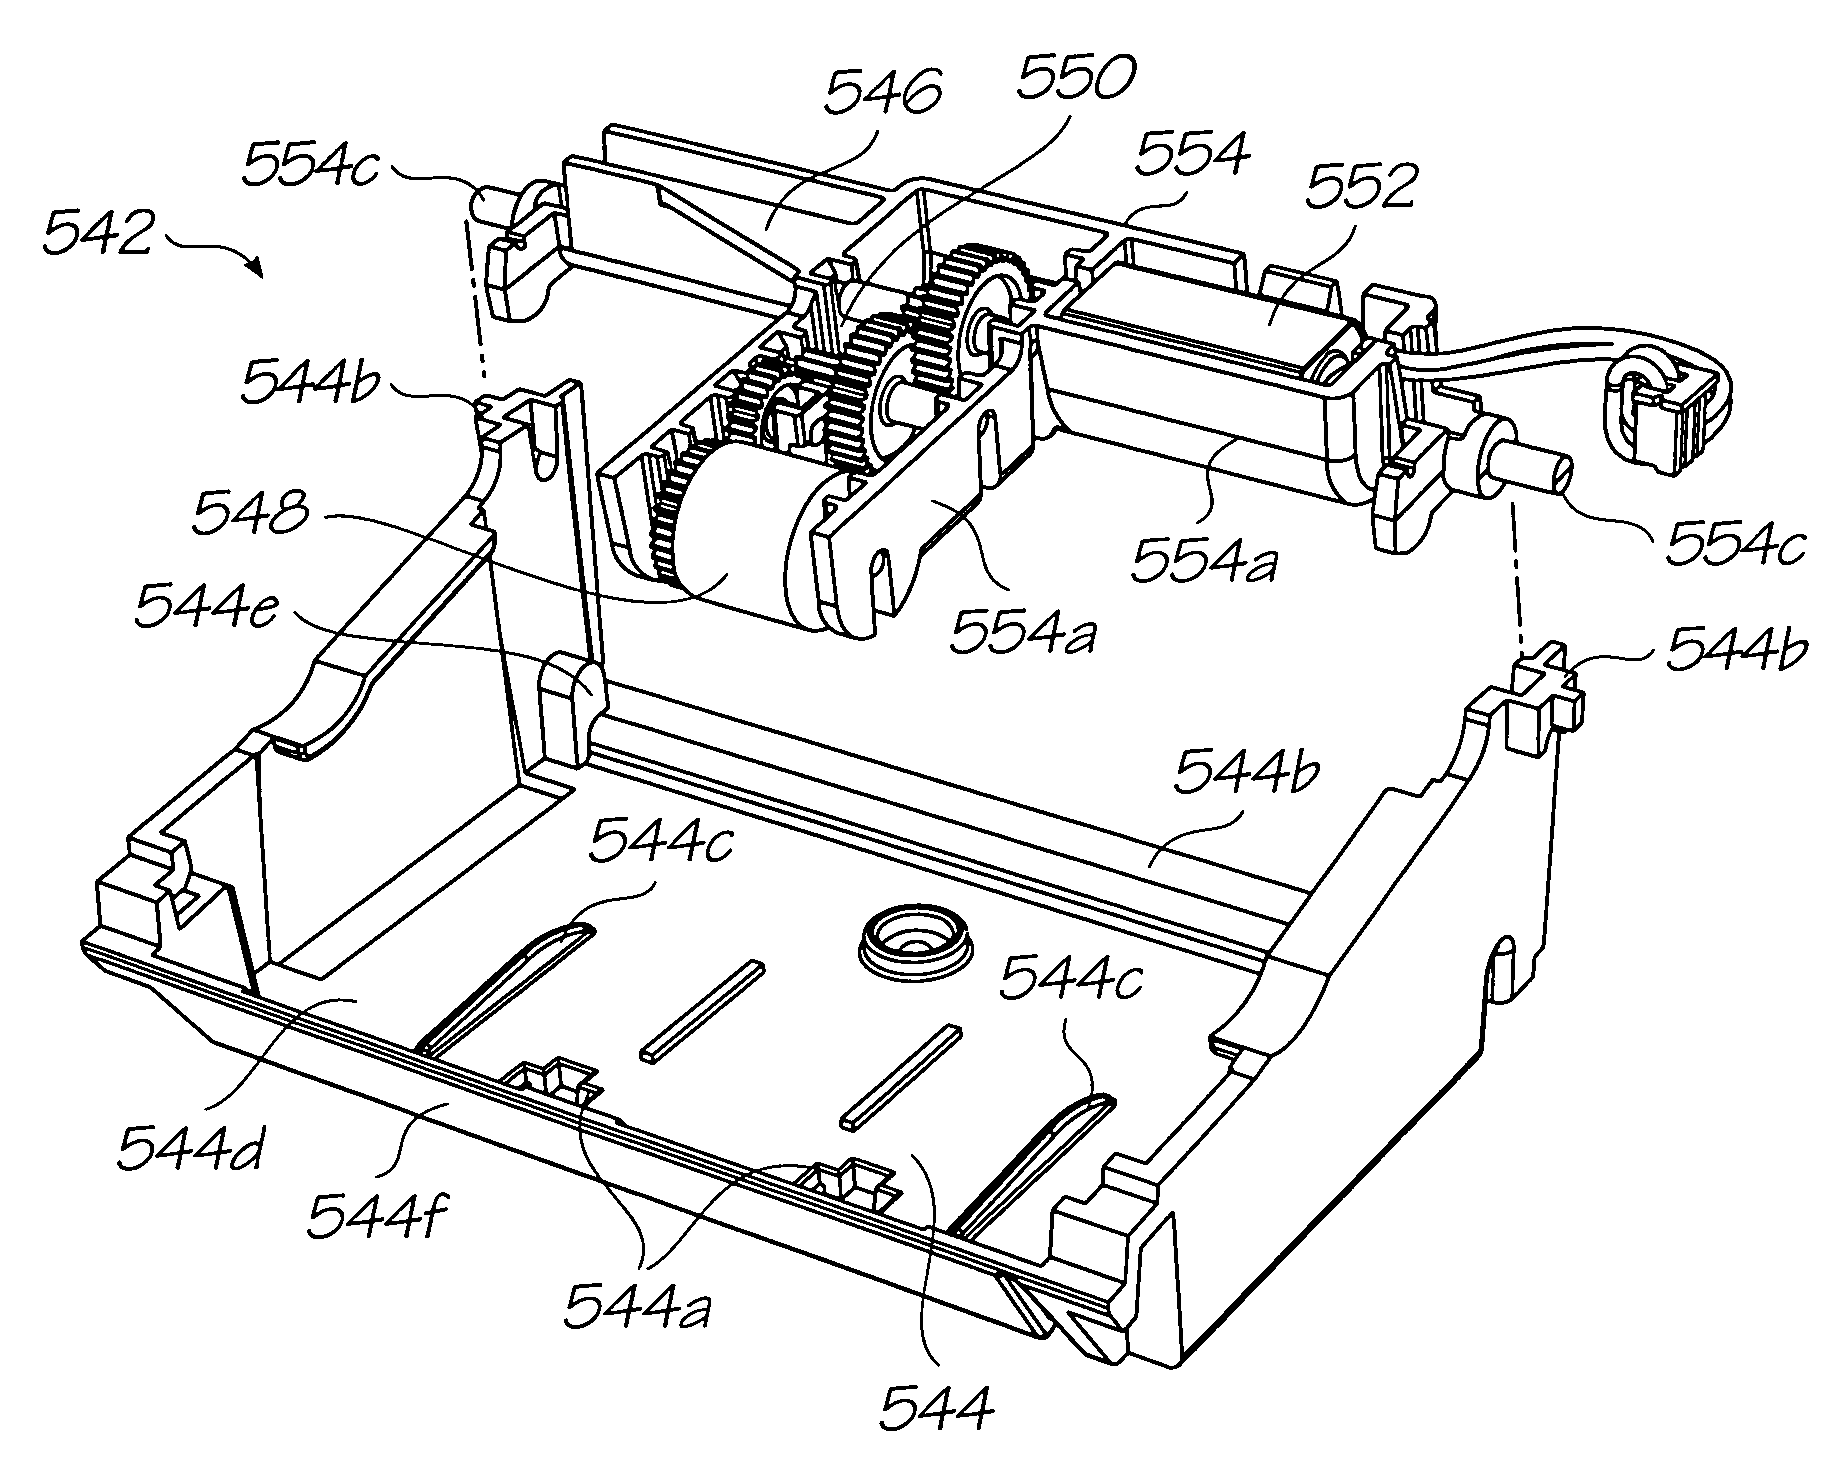 Printer having compact media pick-up device